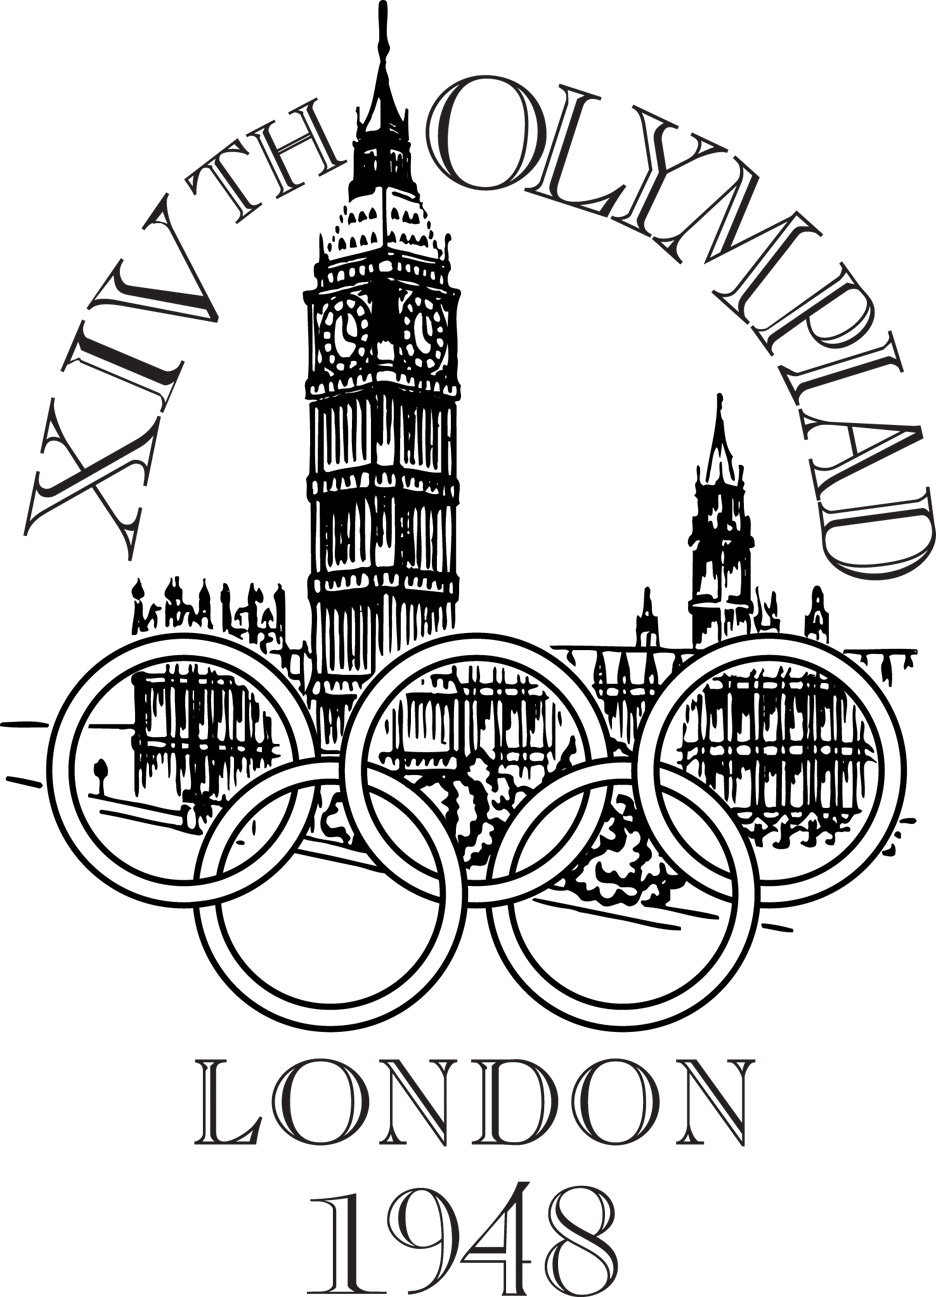 Logo of the 1948 London Olympics